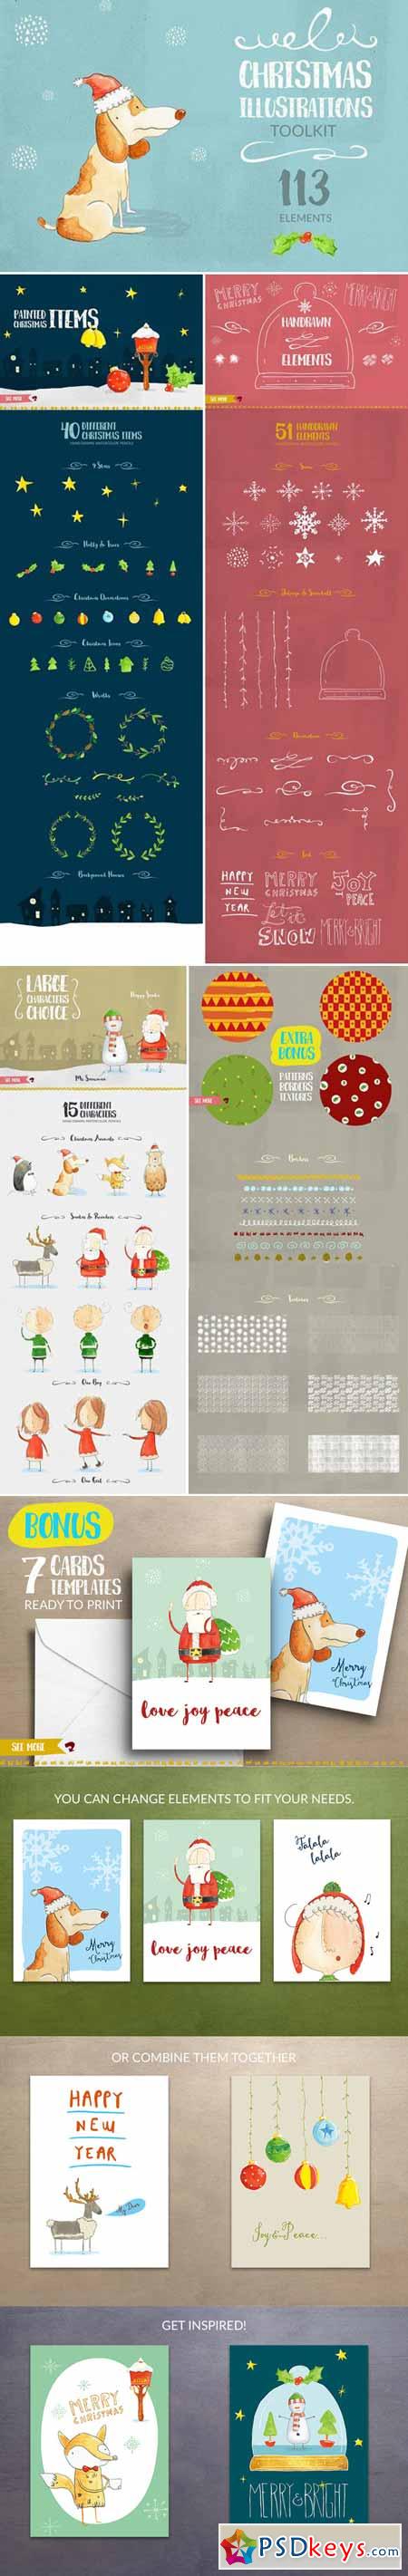 Christmas Illustrations toolkit 462162